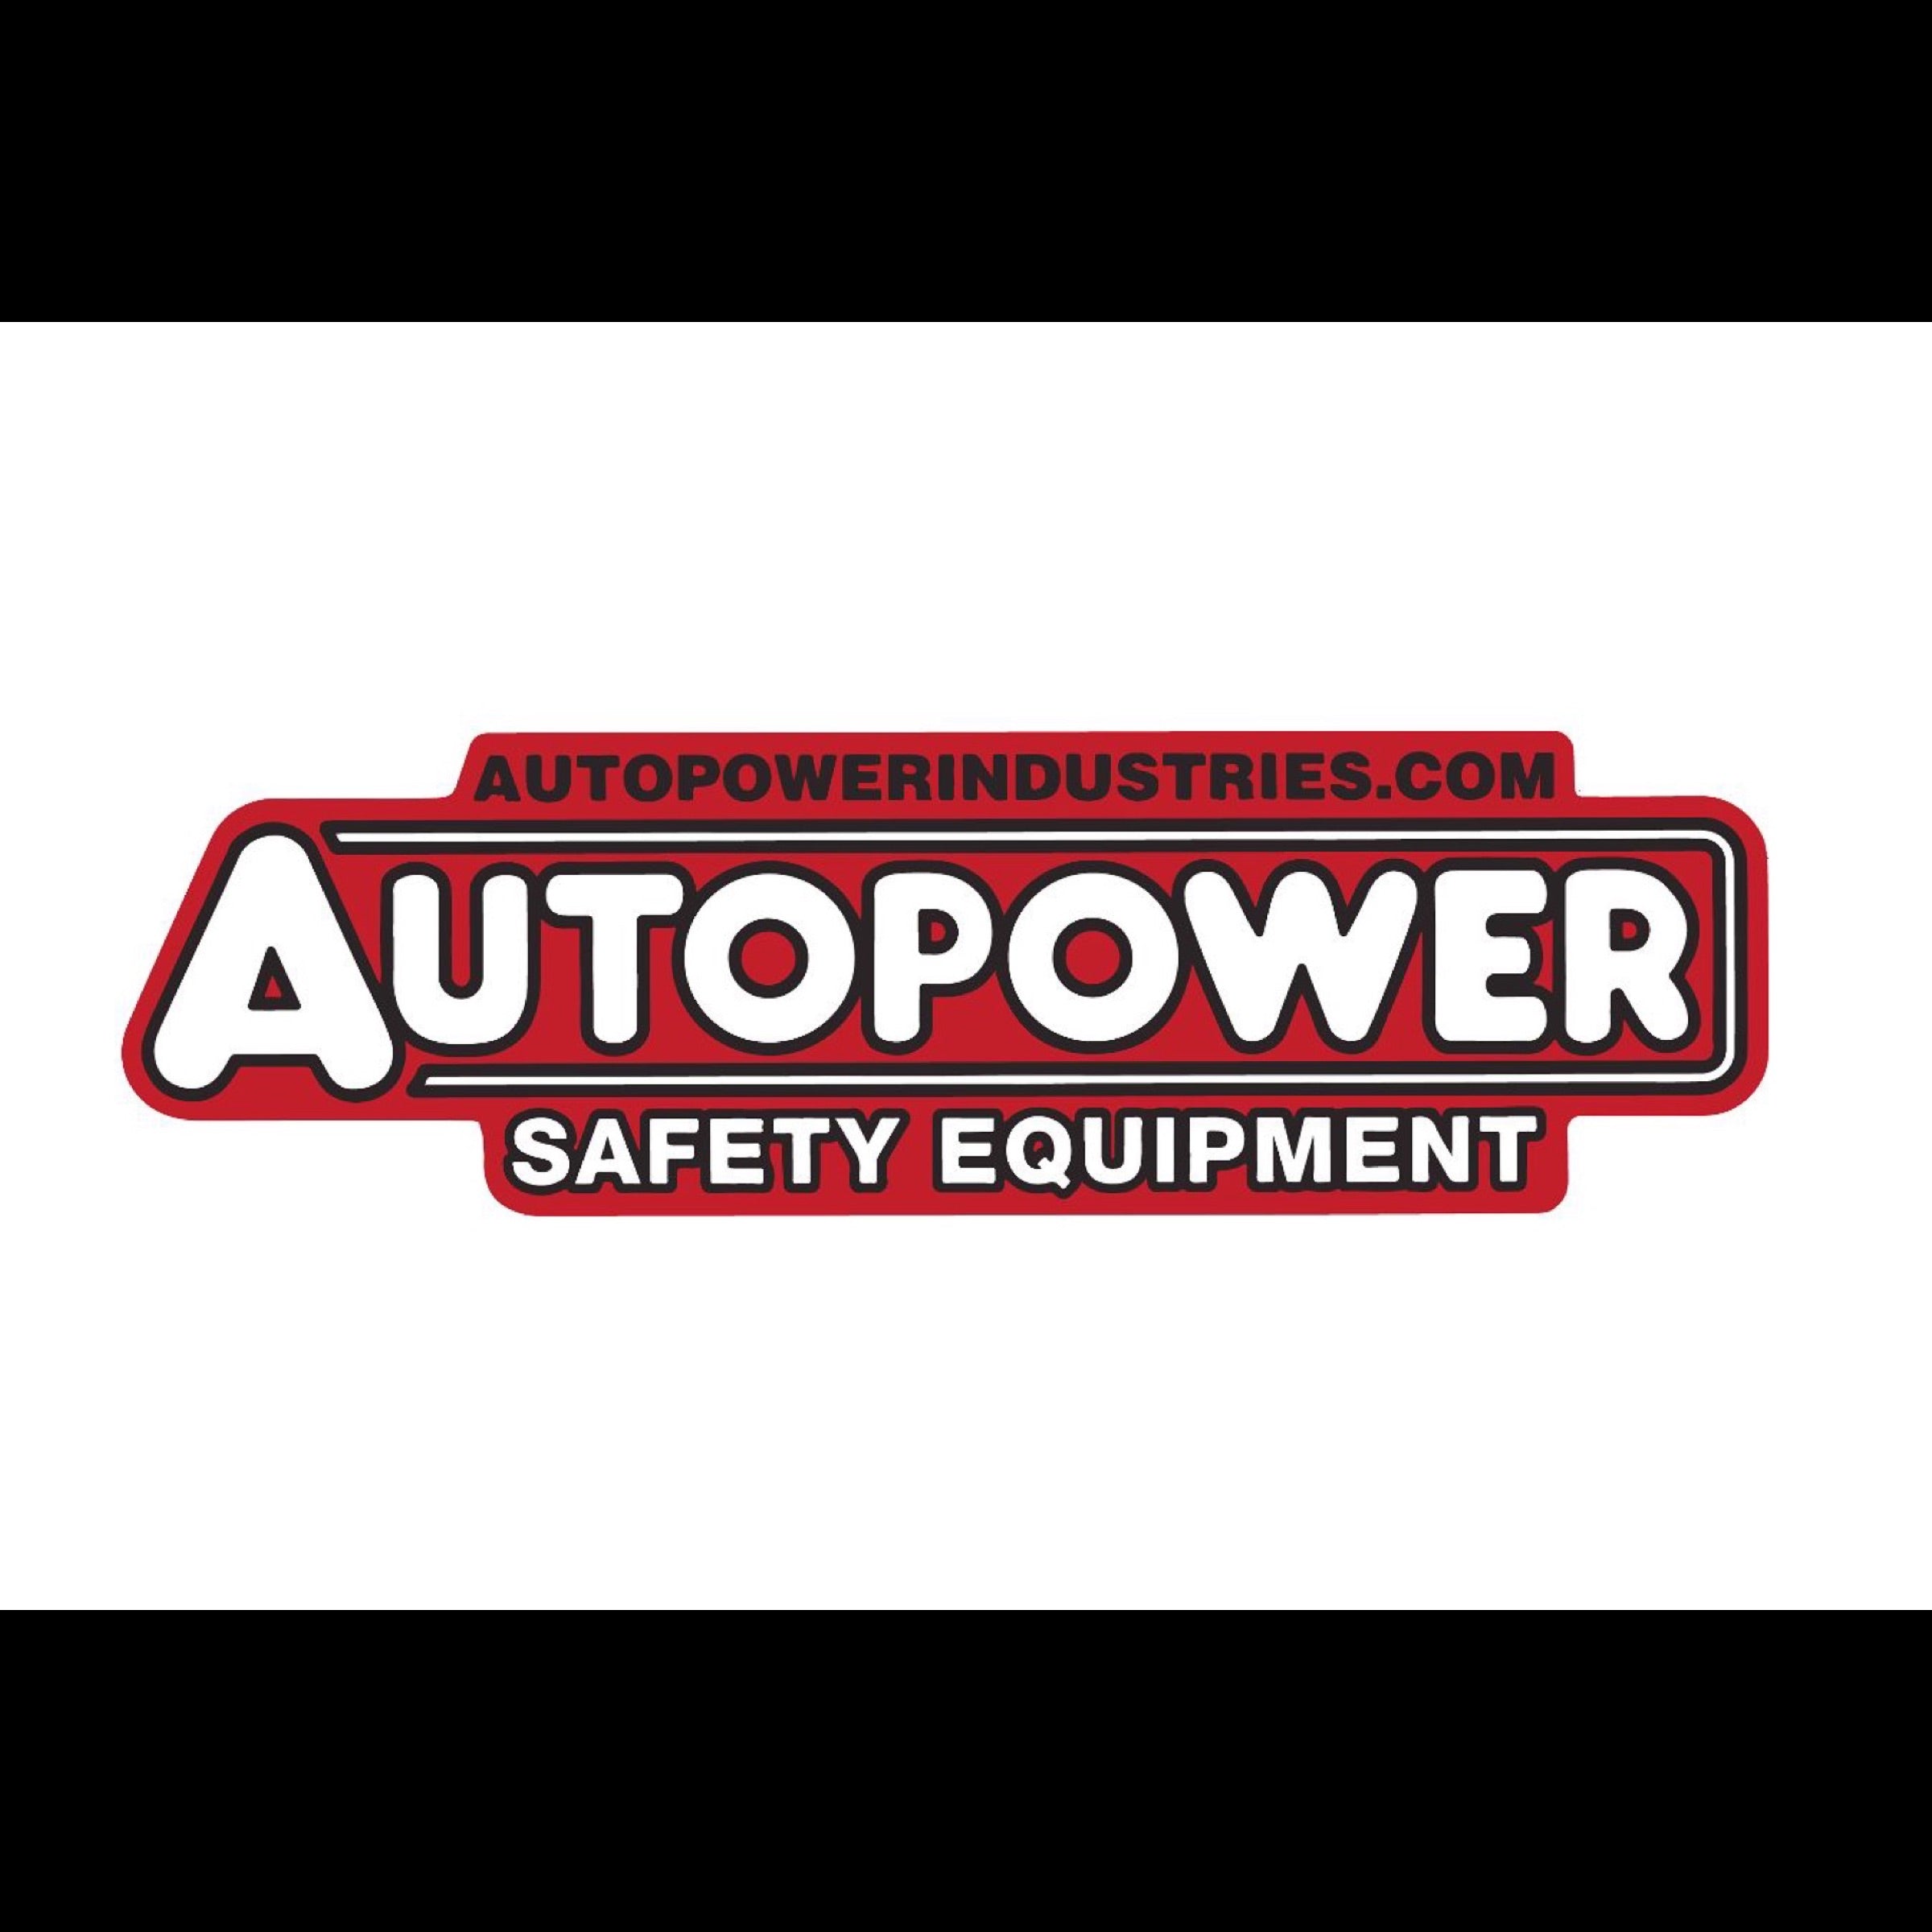 Autopower safety equipment logo with white background